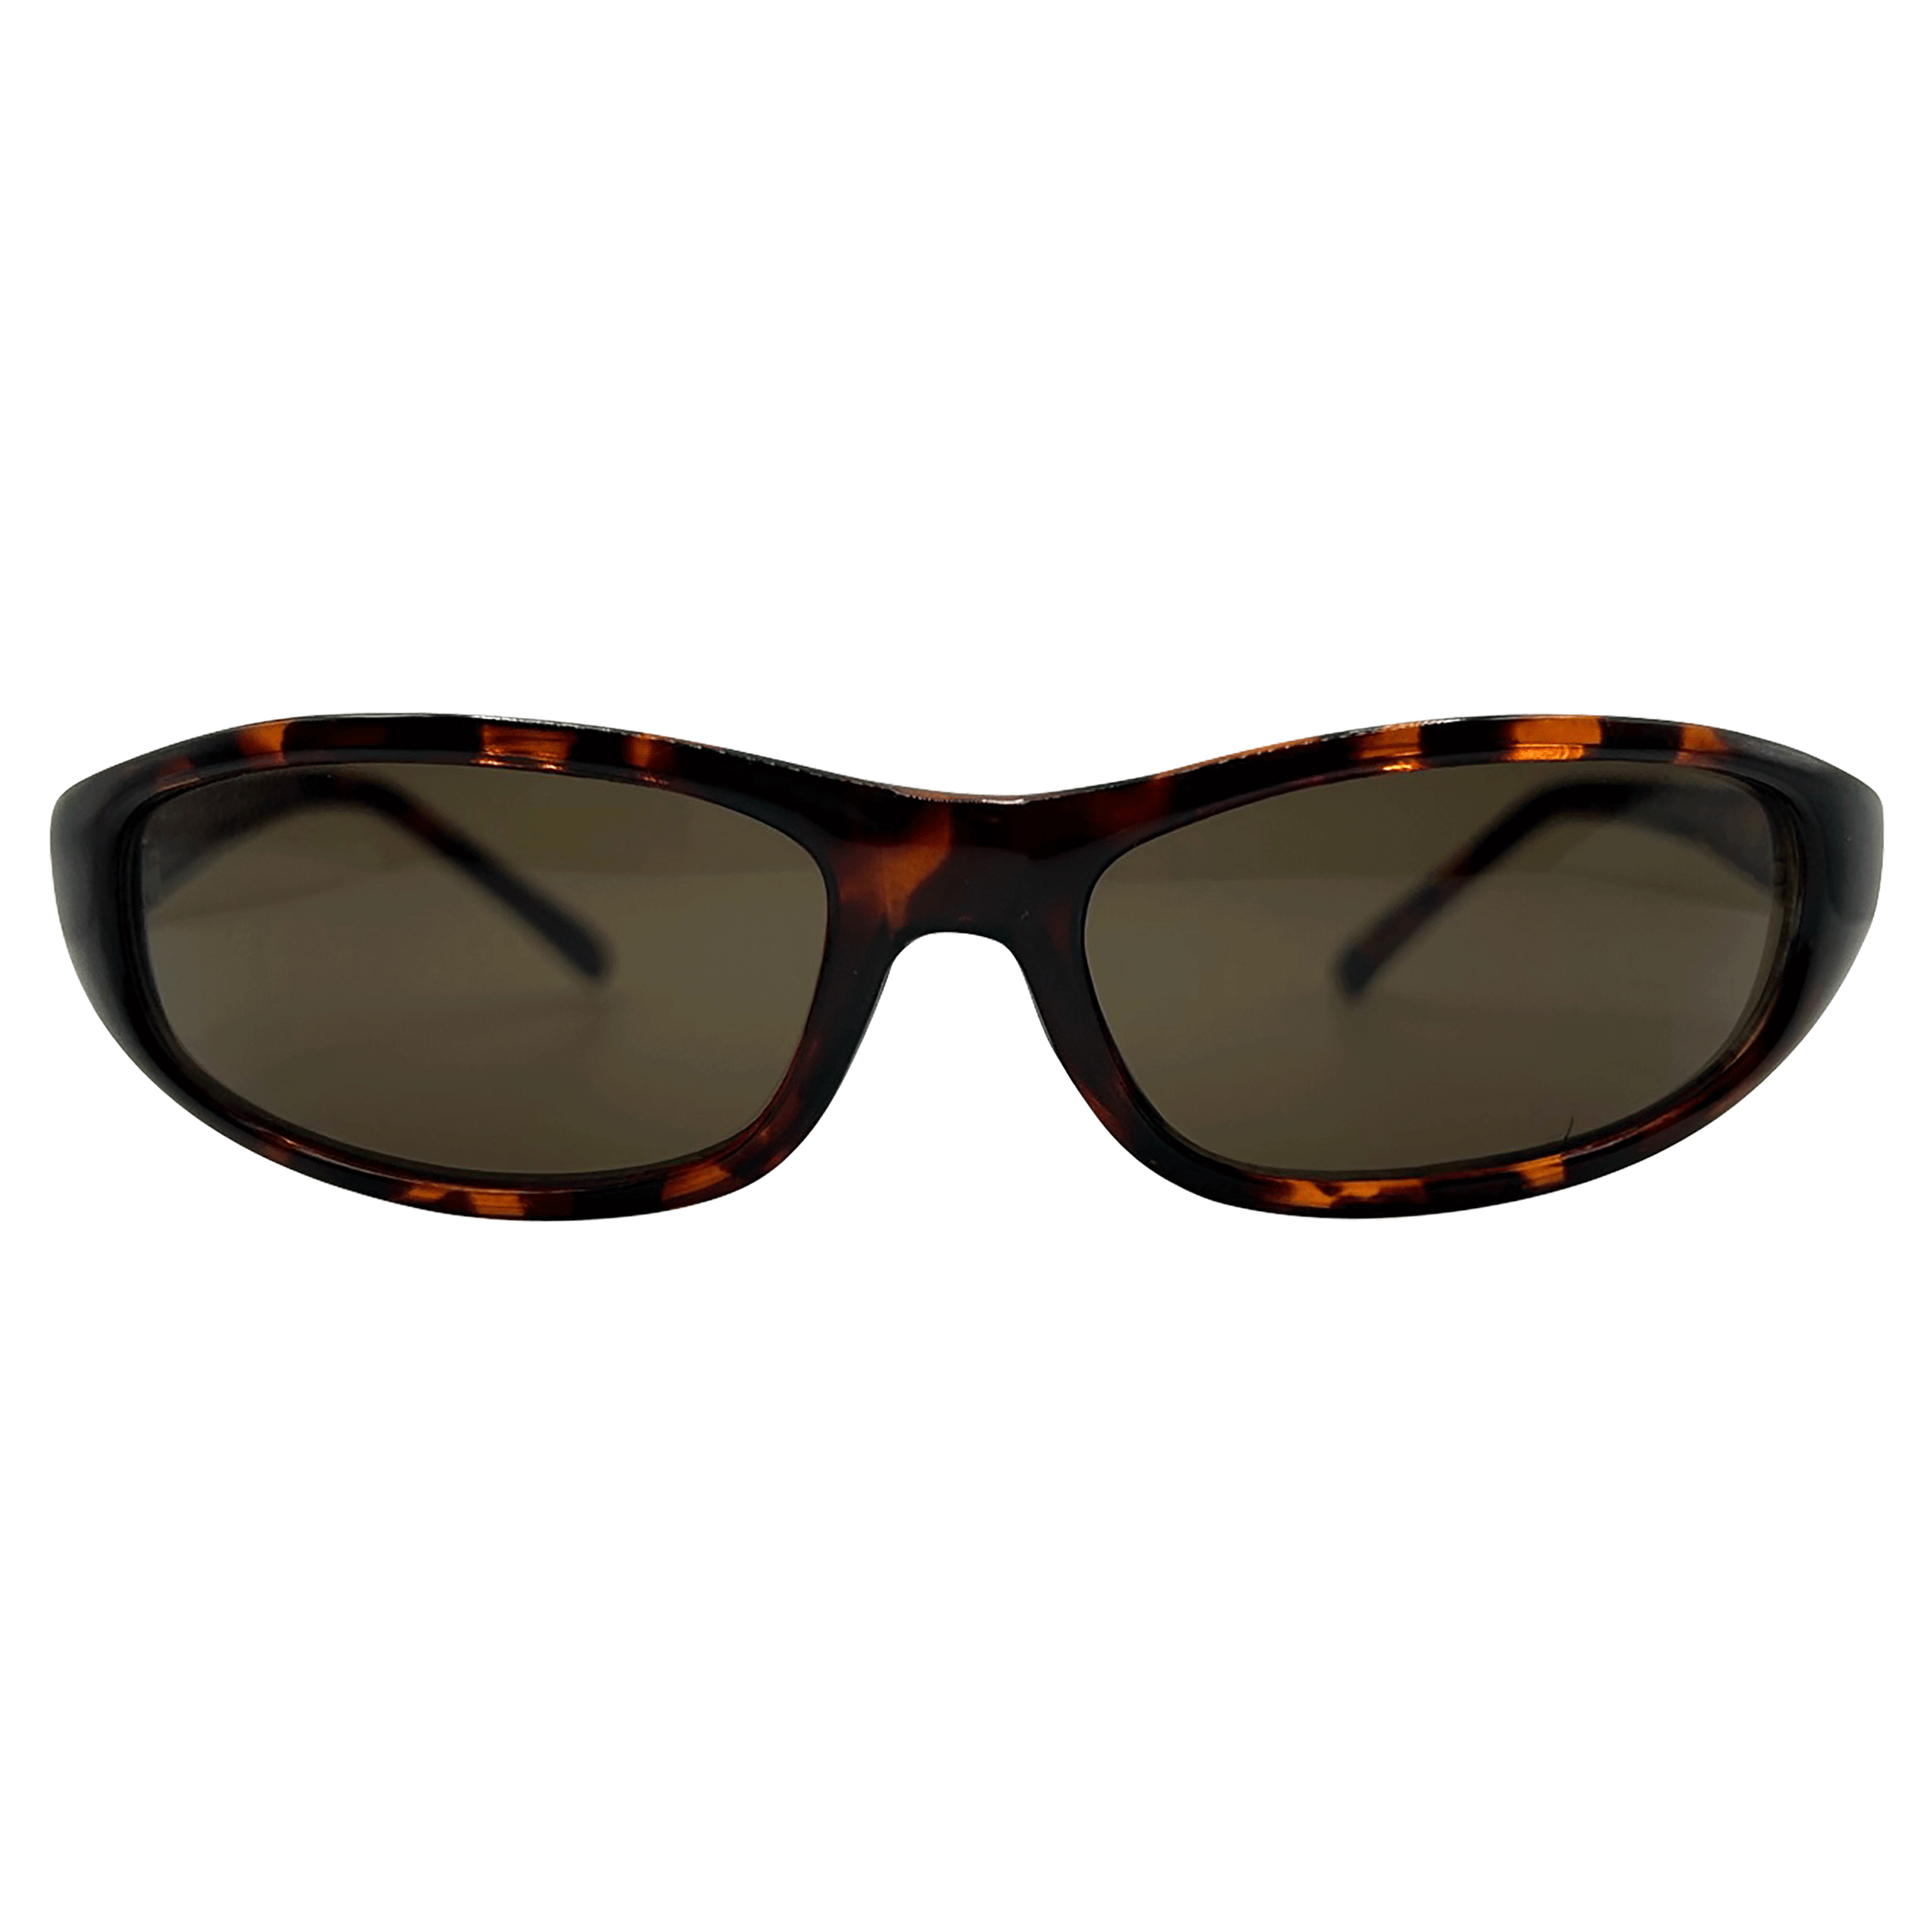 KEYTAR Tortoise/Brown Sports Sunglasses